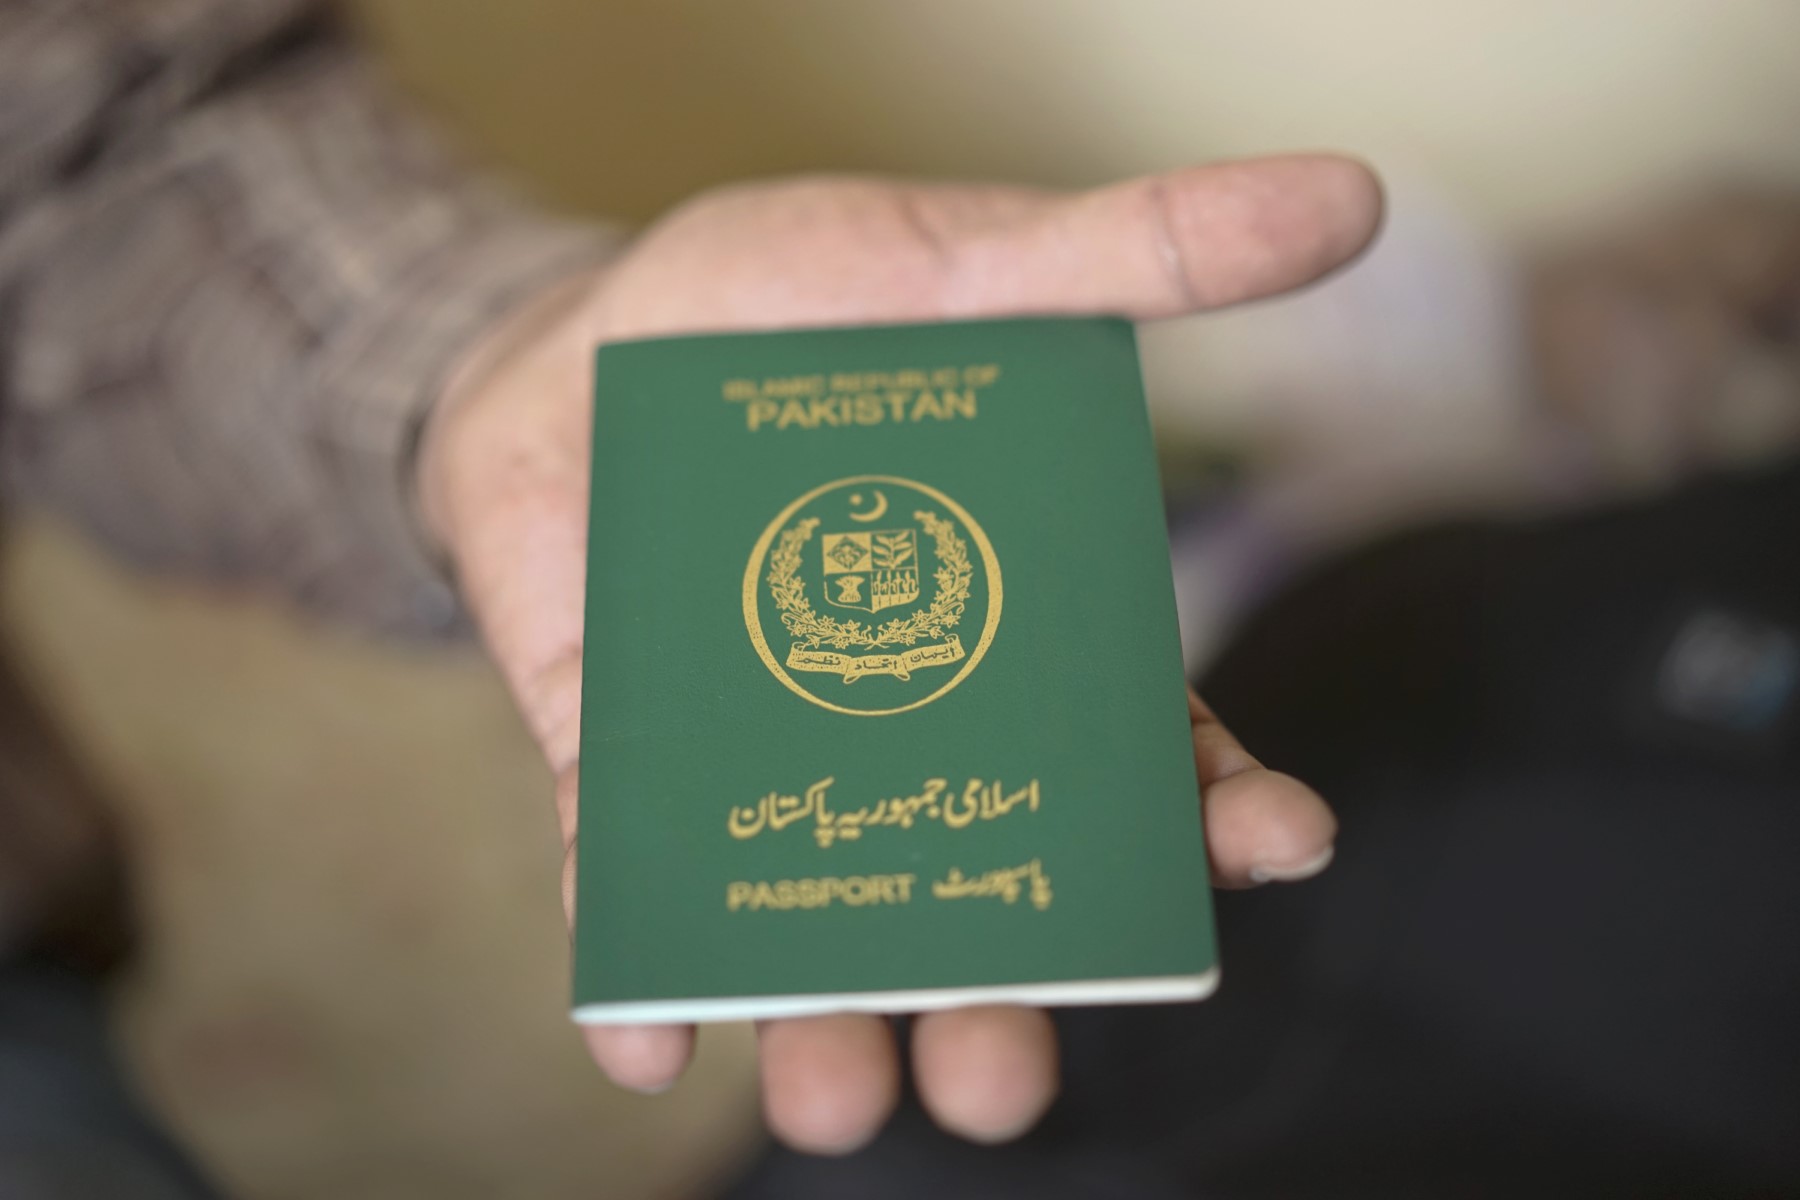 Pakistan Passport 